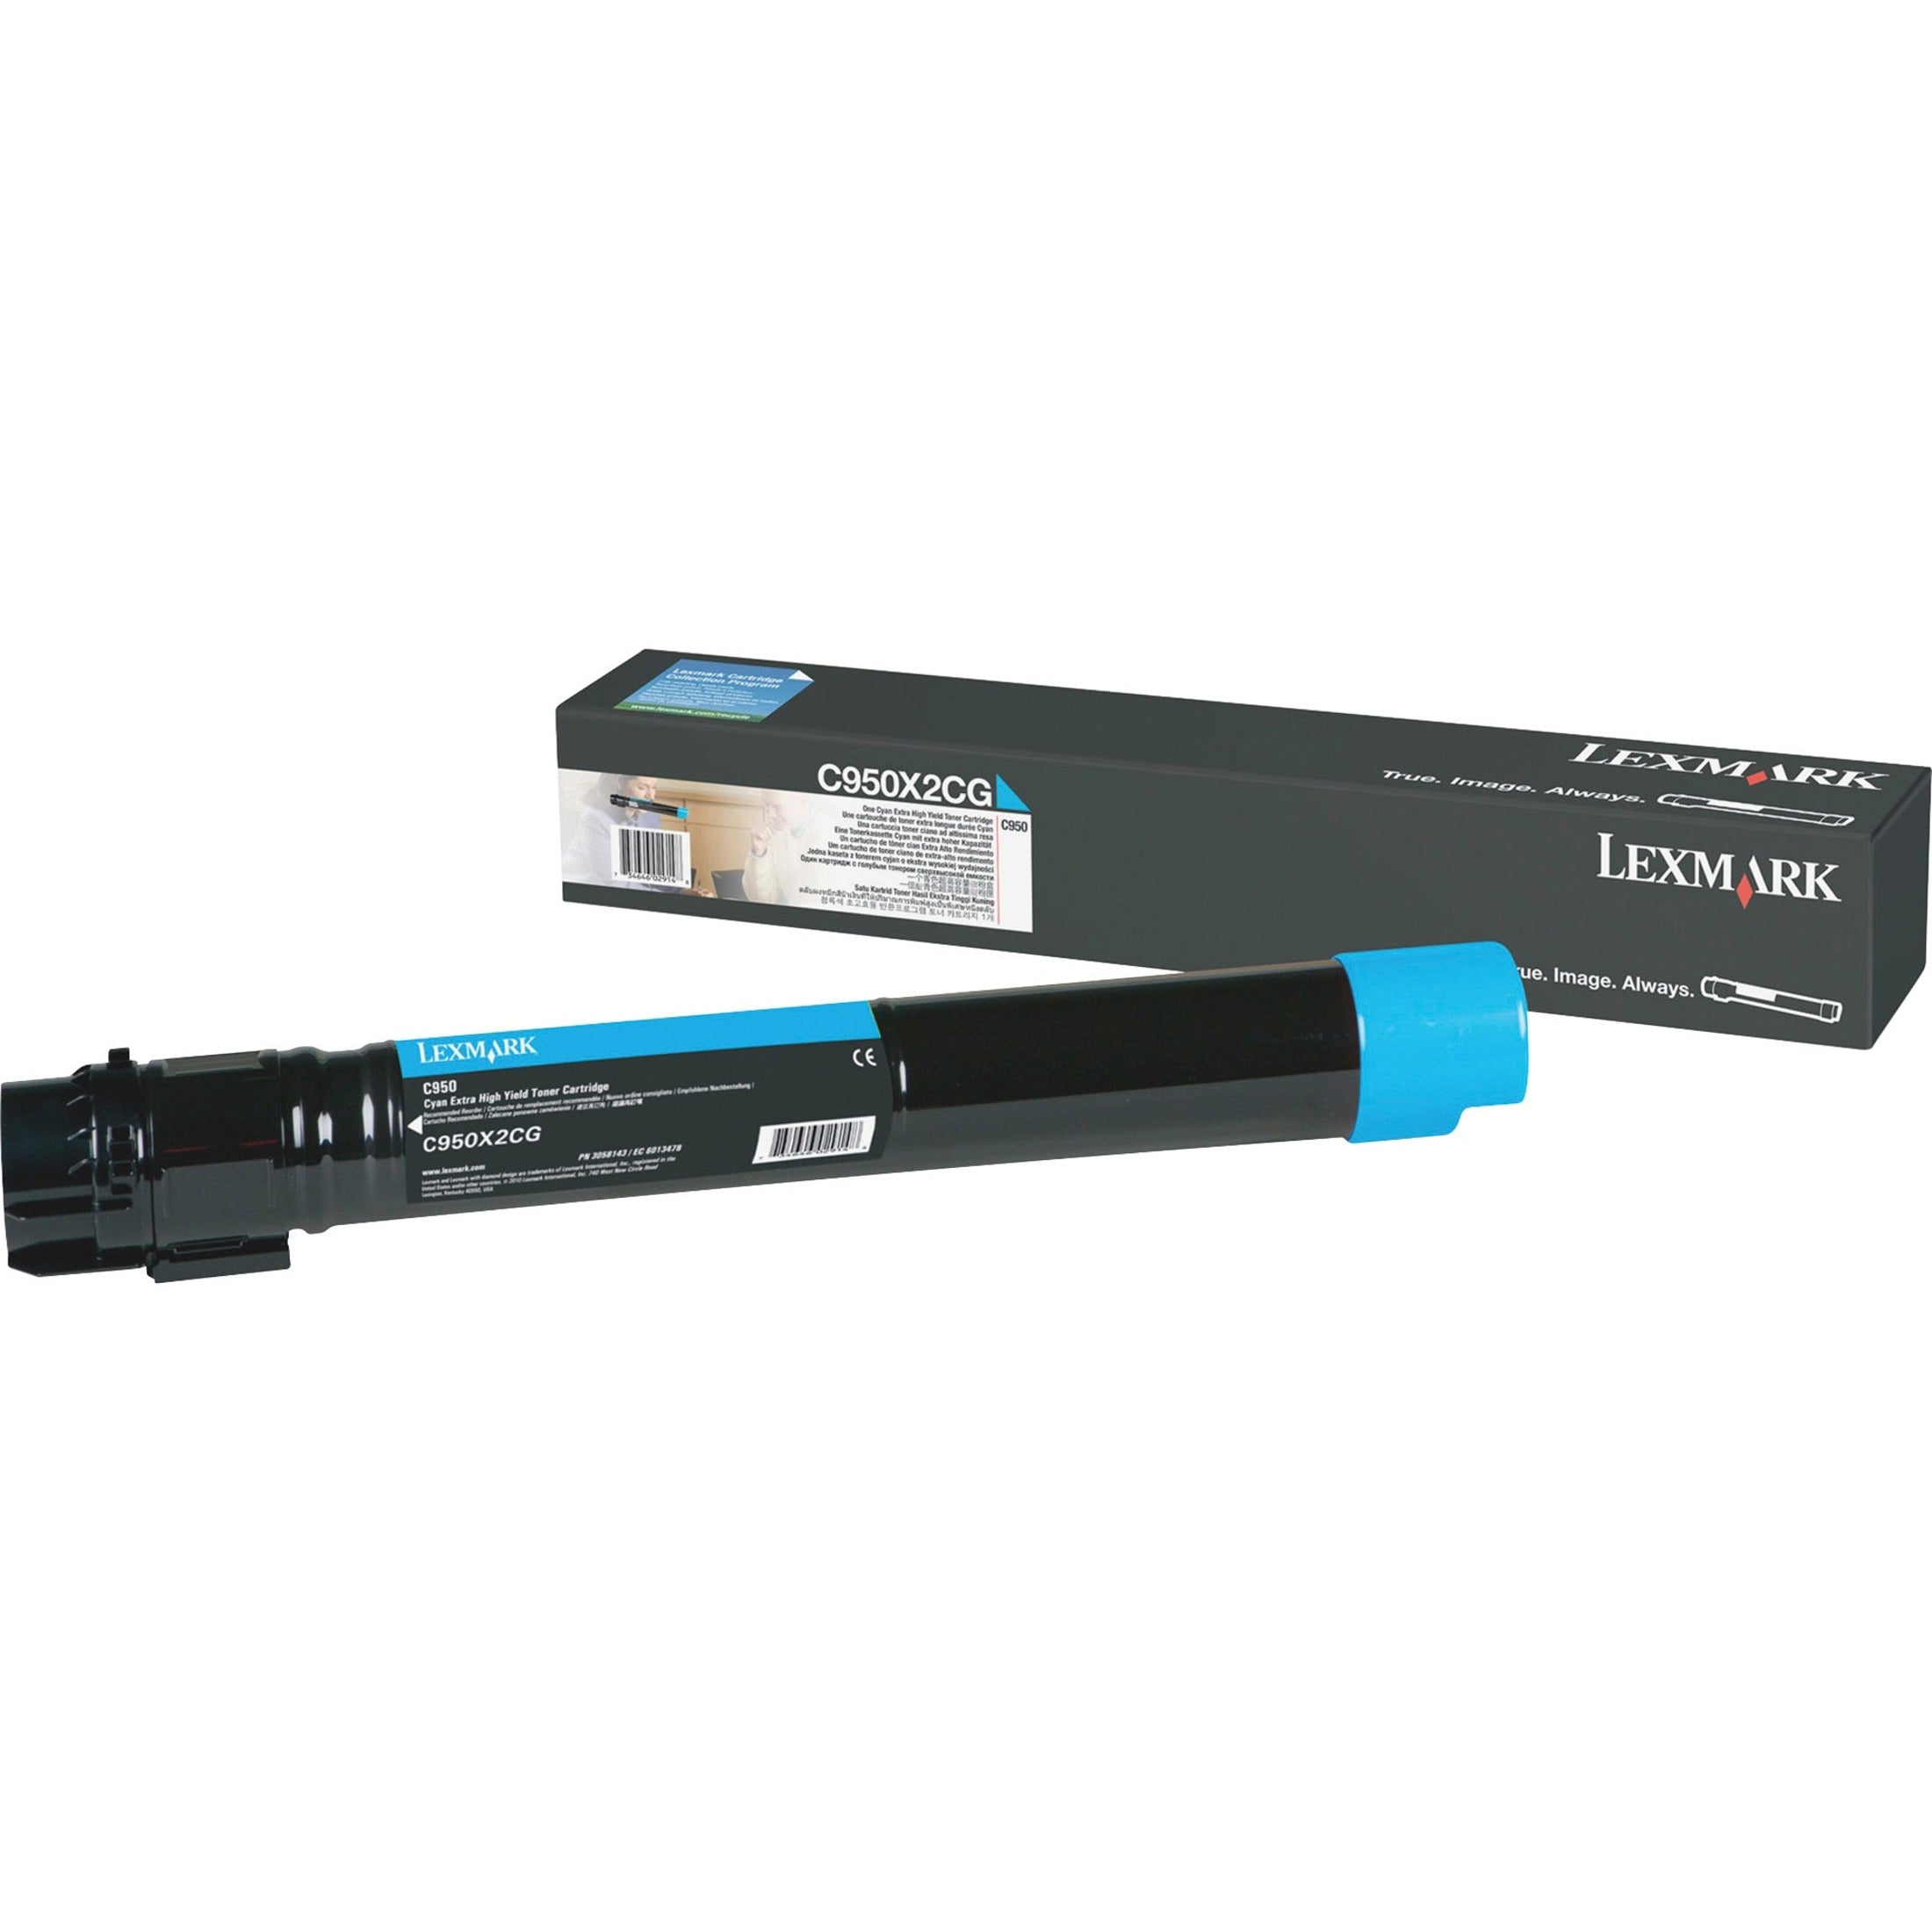 Lexmark C950X2CG C950 Extra High-yld Toner Cartridge, Cyan, 22,000 Pages Yield